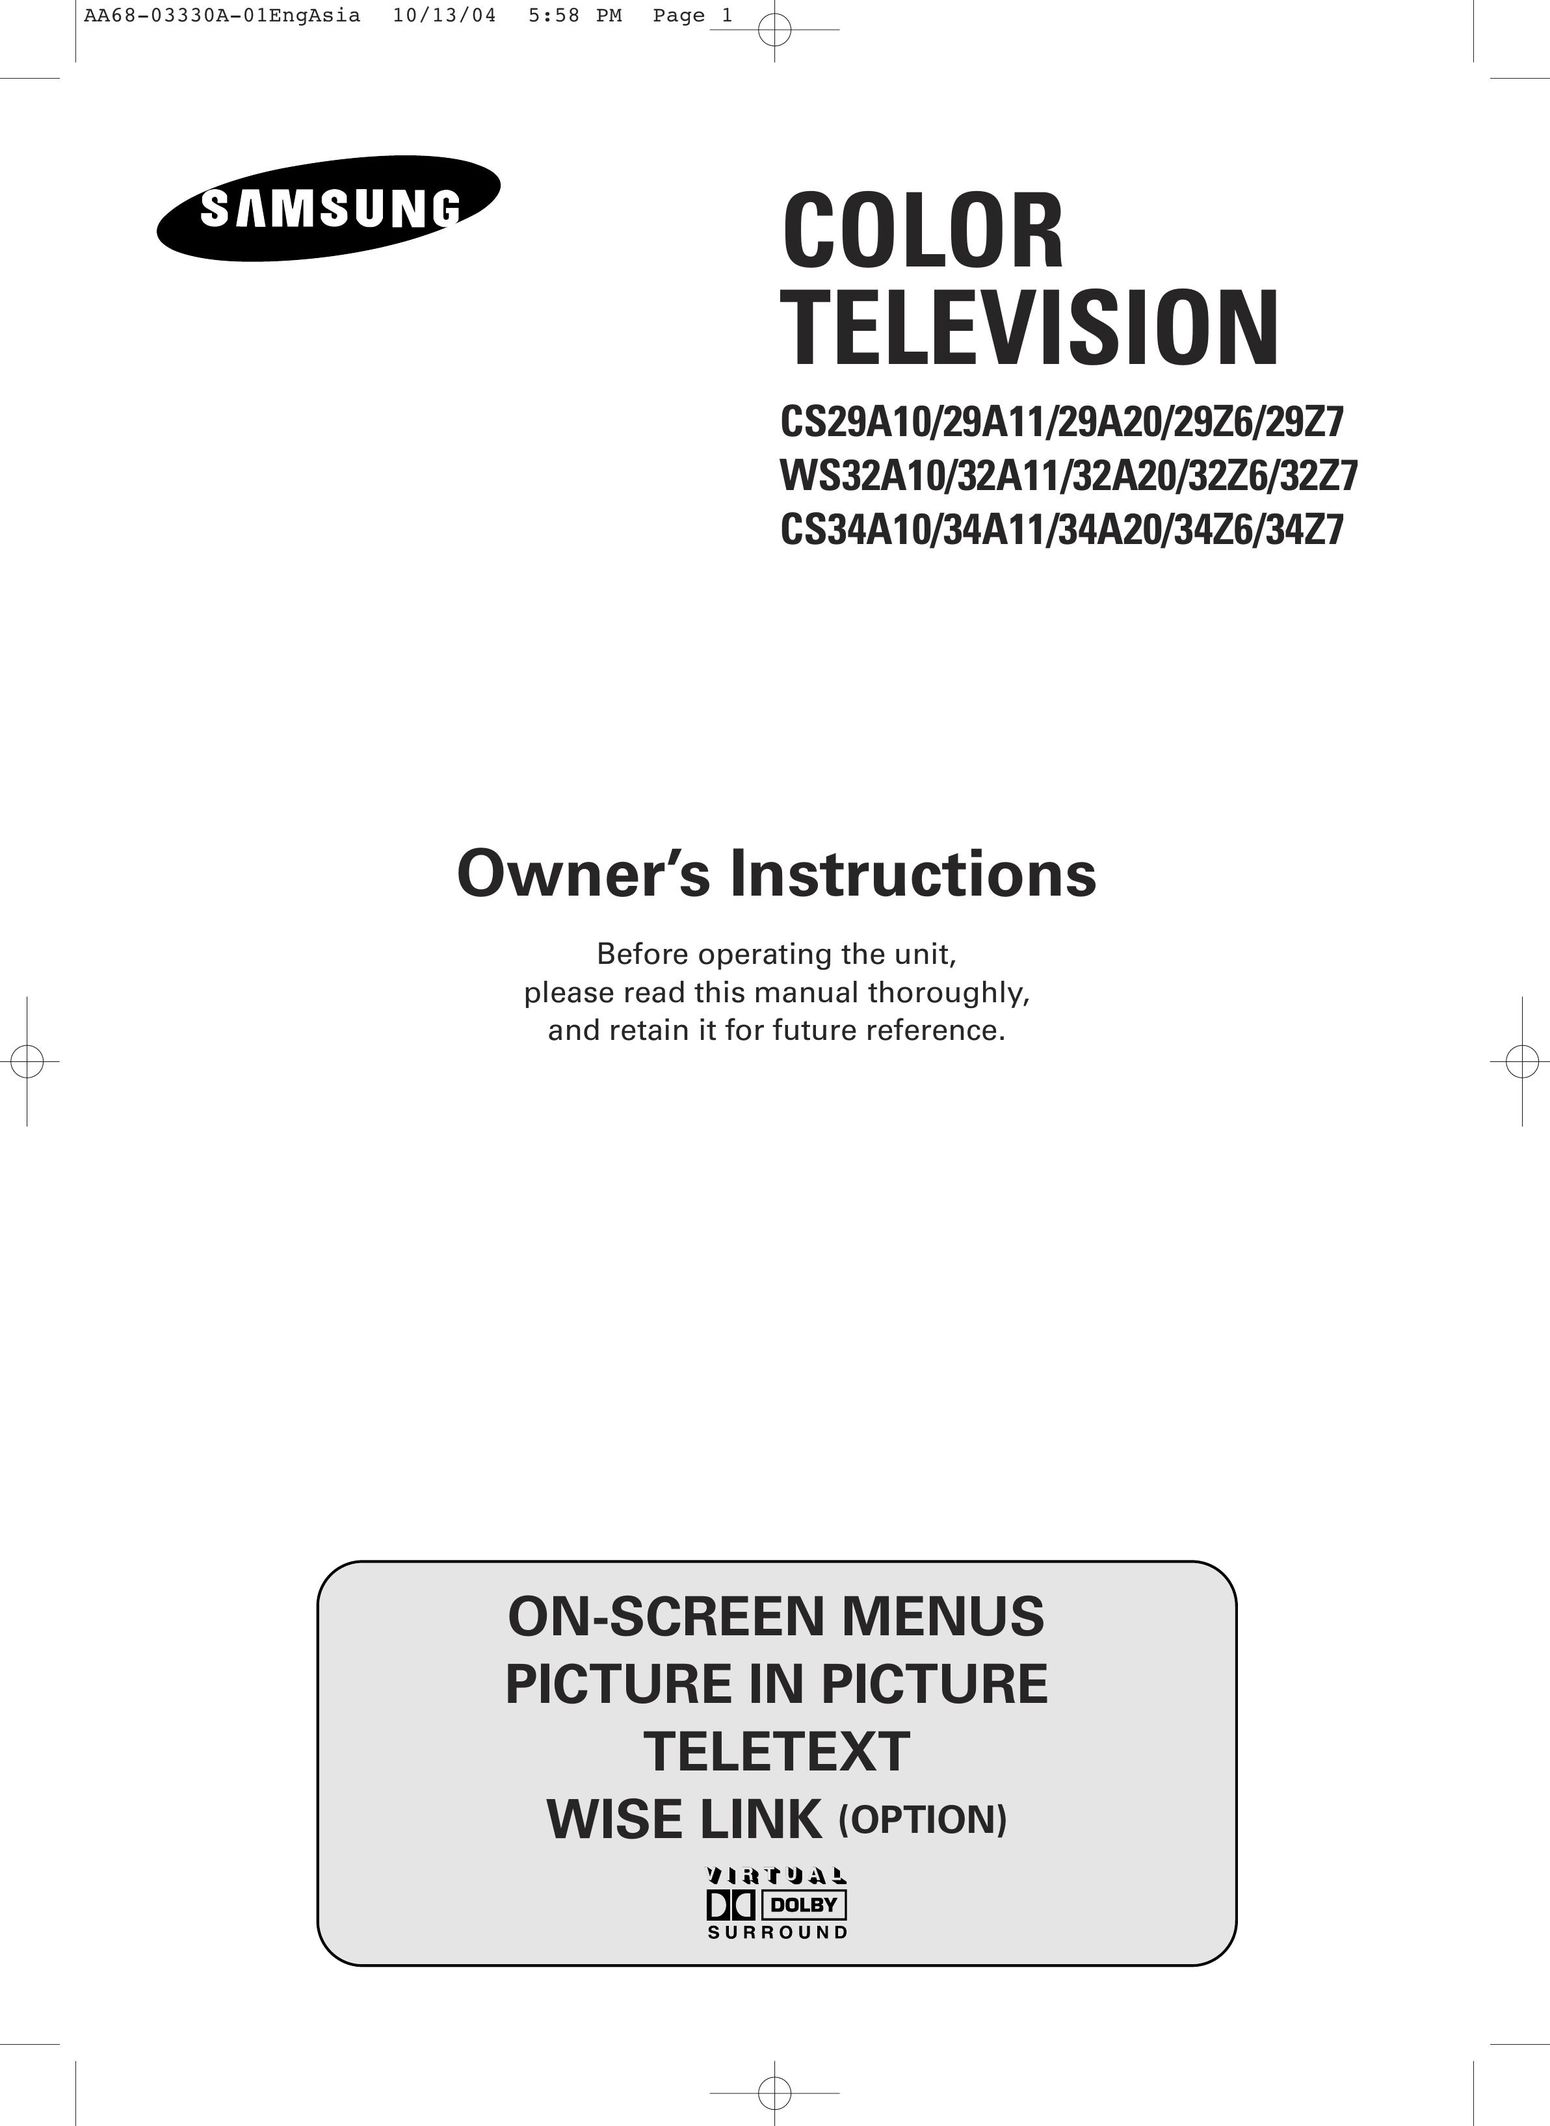 Samsung 34A20 CRT Television User Manual